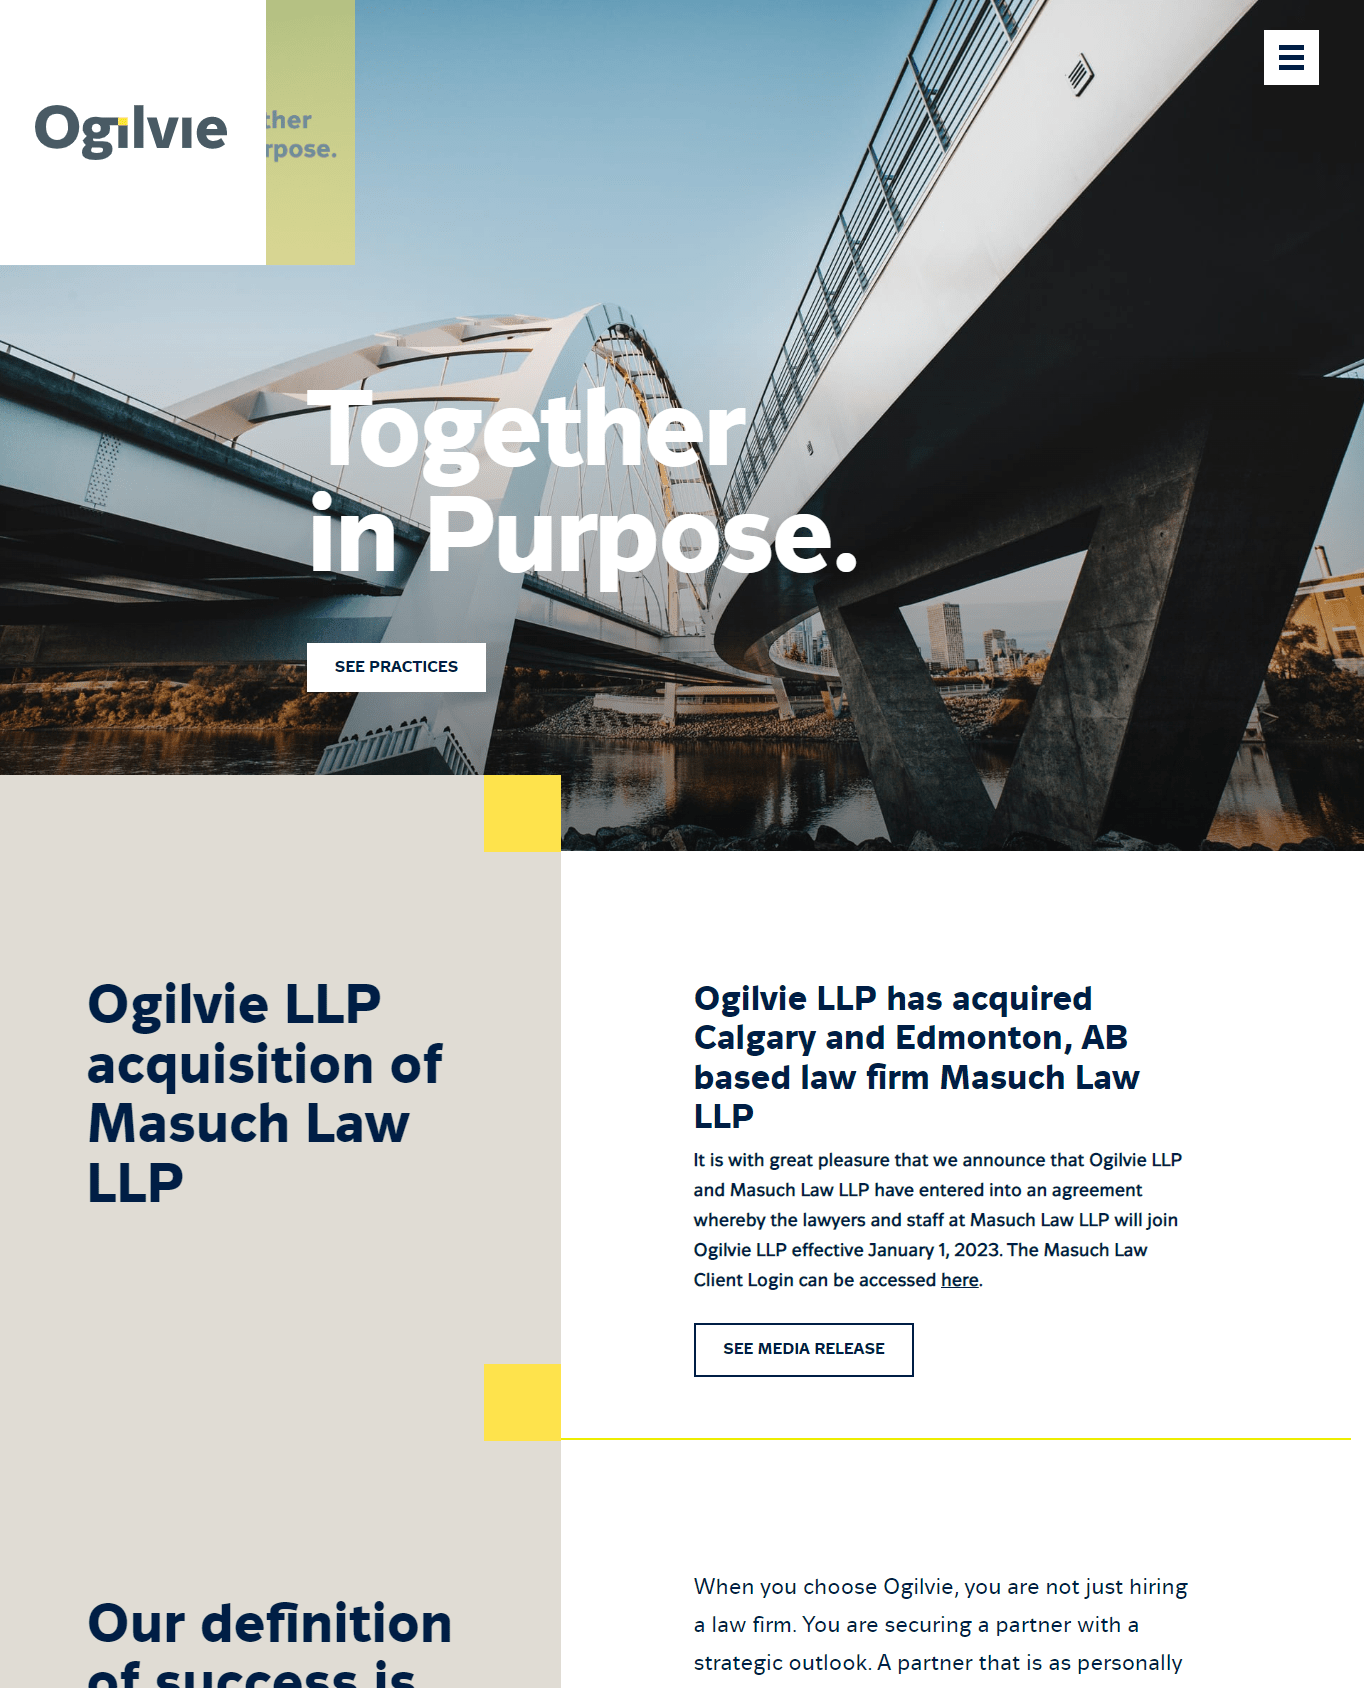 Ogilvie law firm website